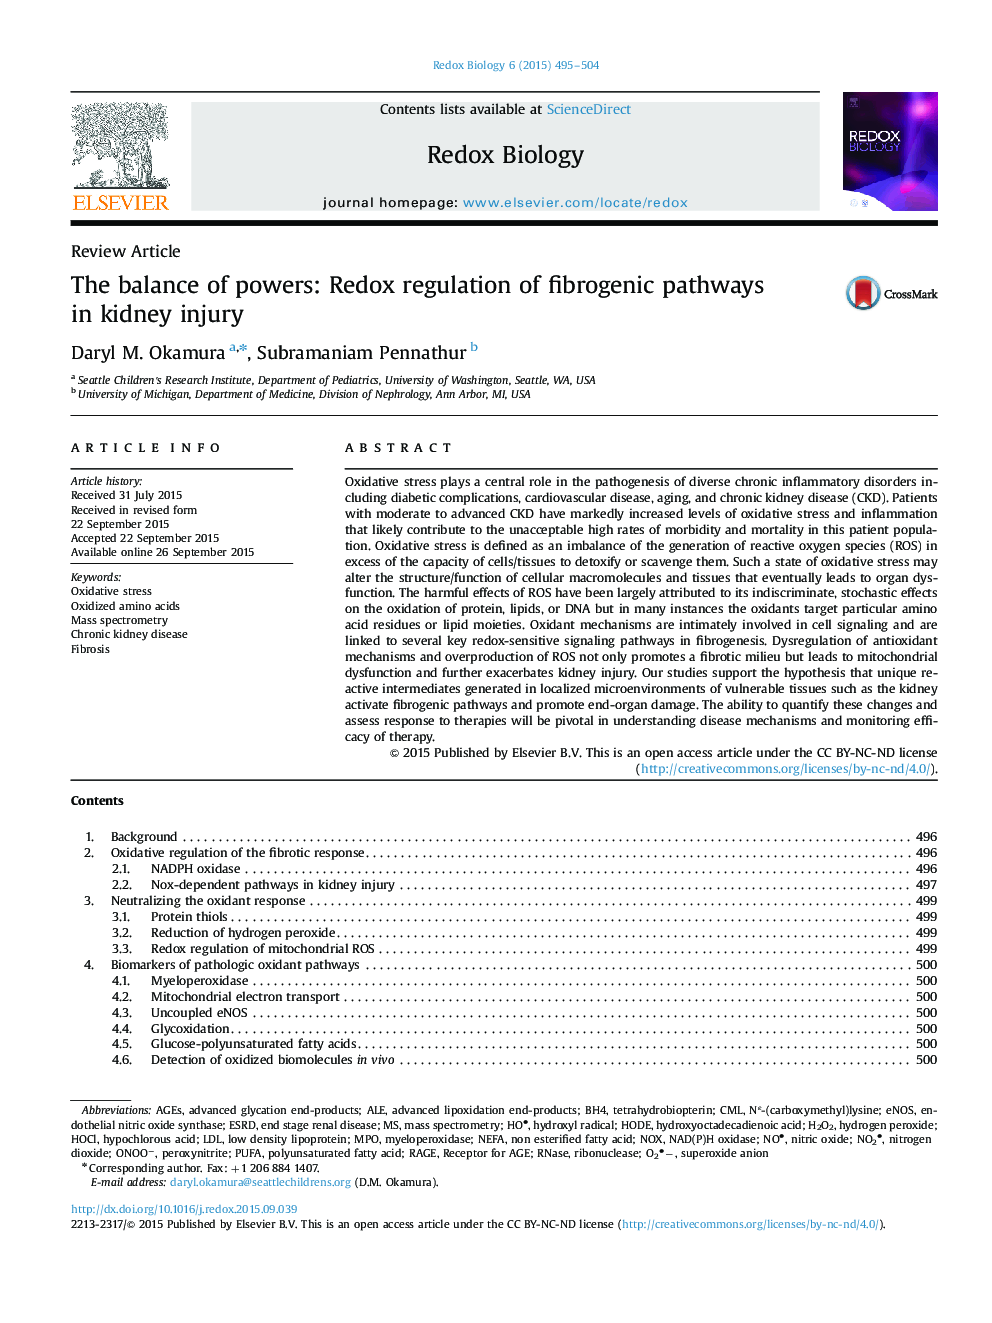 The balance of powers: Redox regulation of fibrogenic pathways in kidney injury